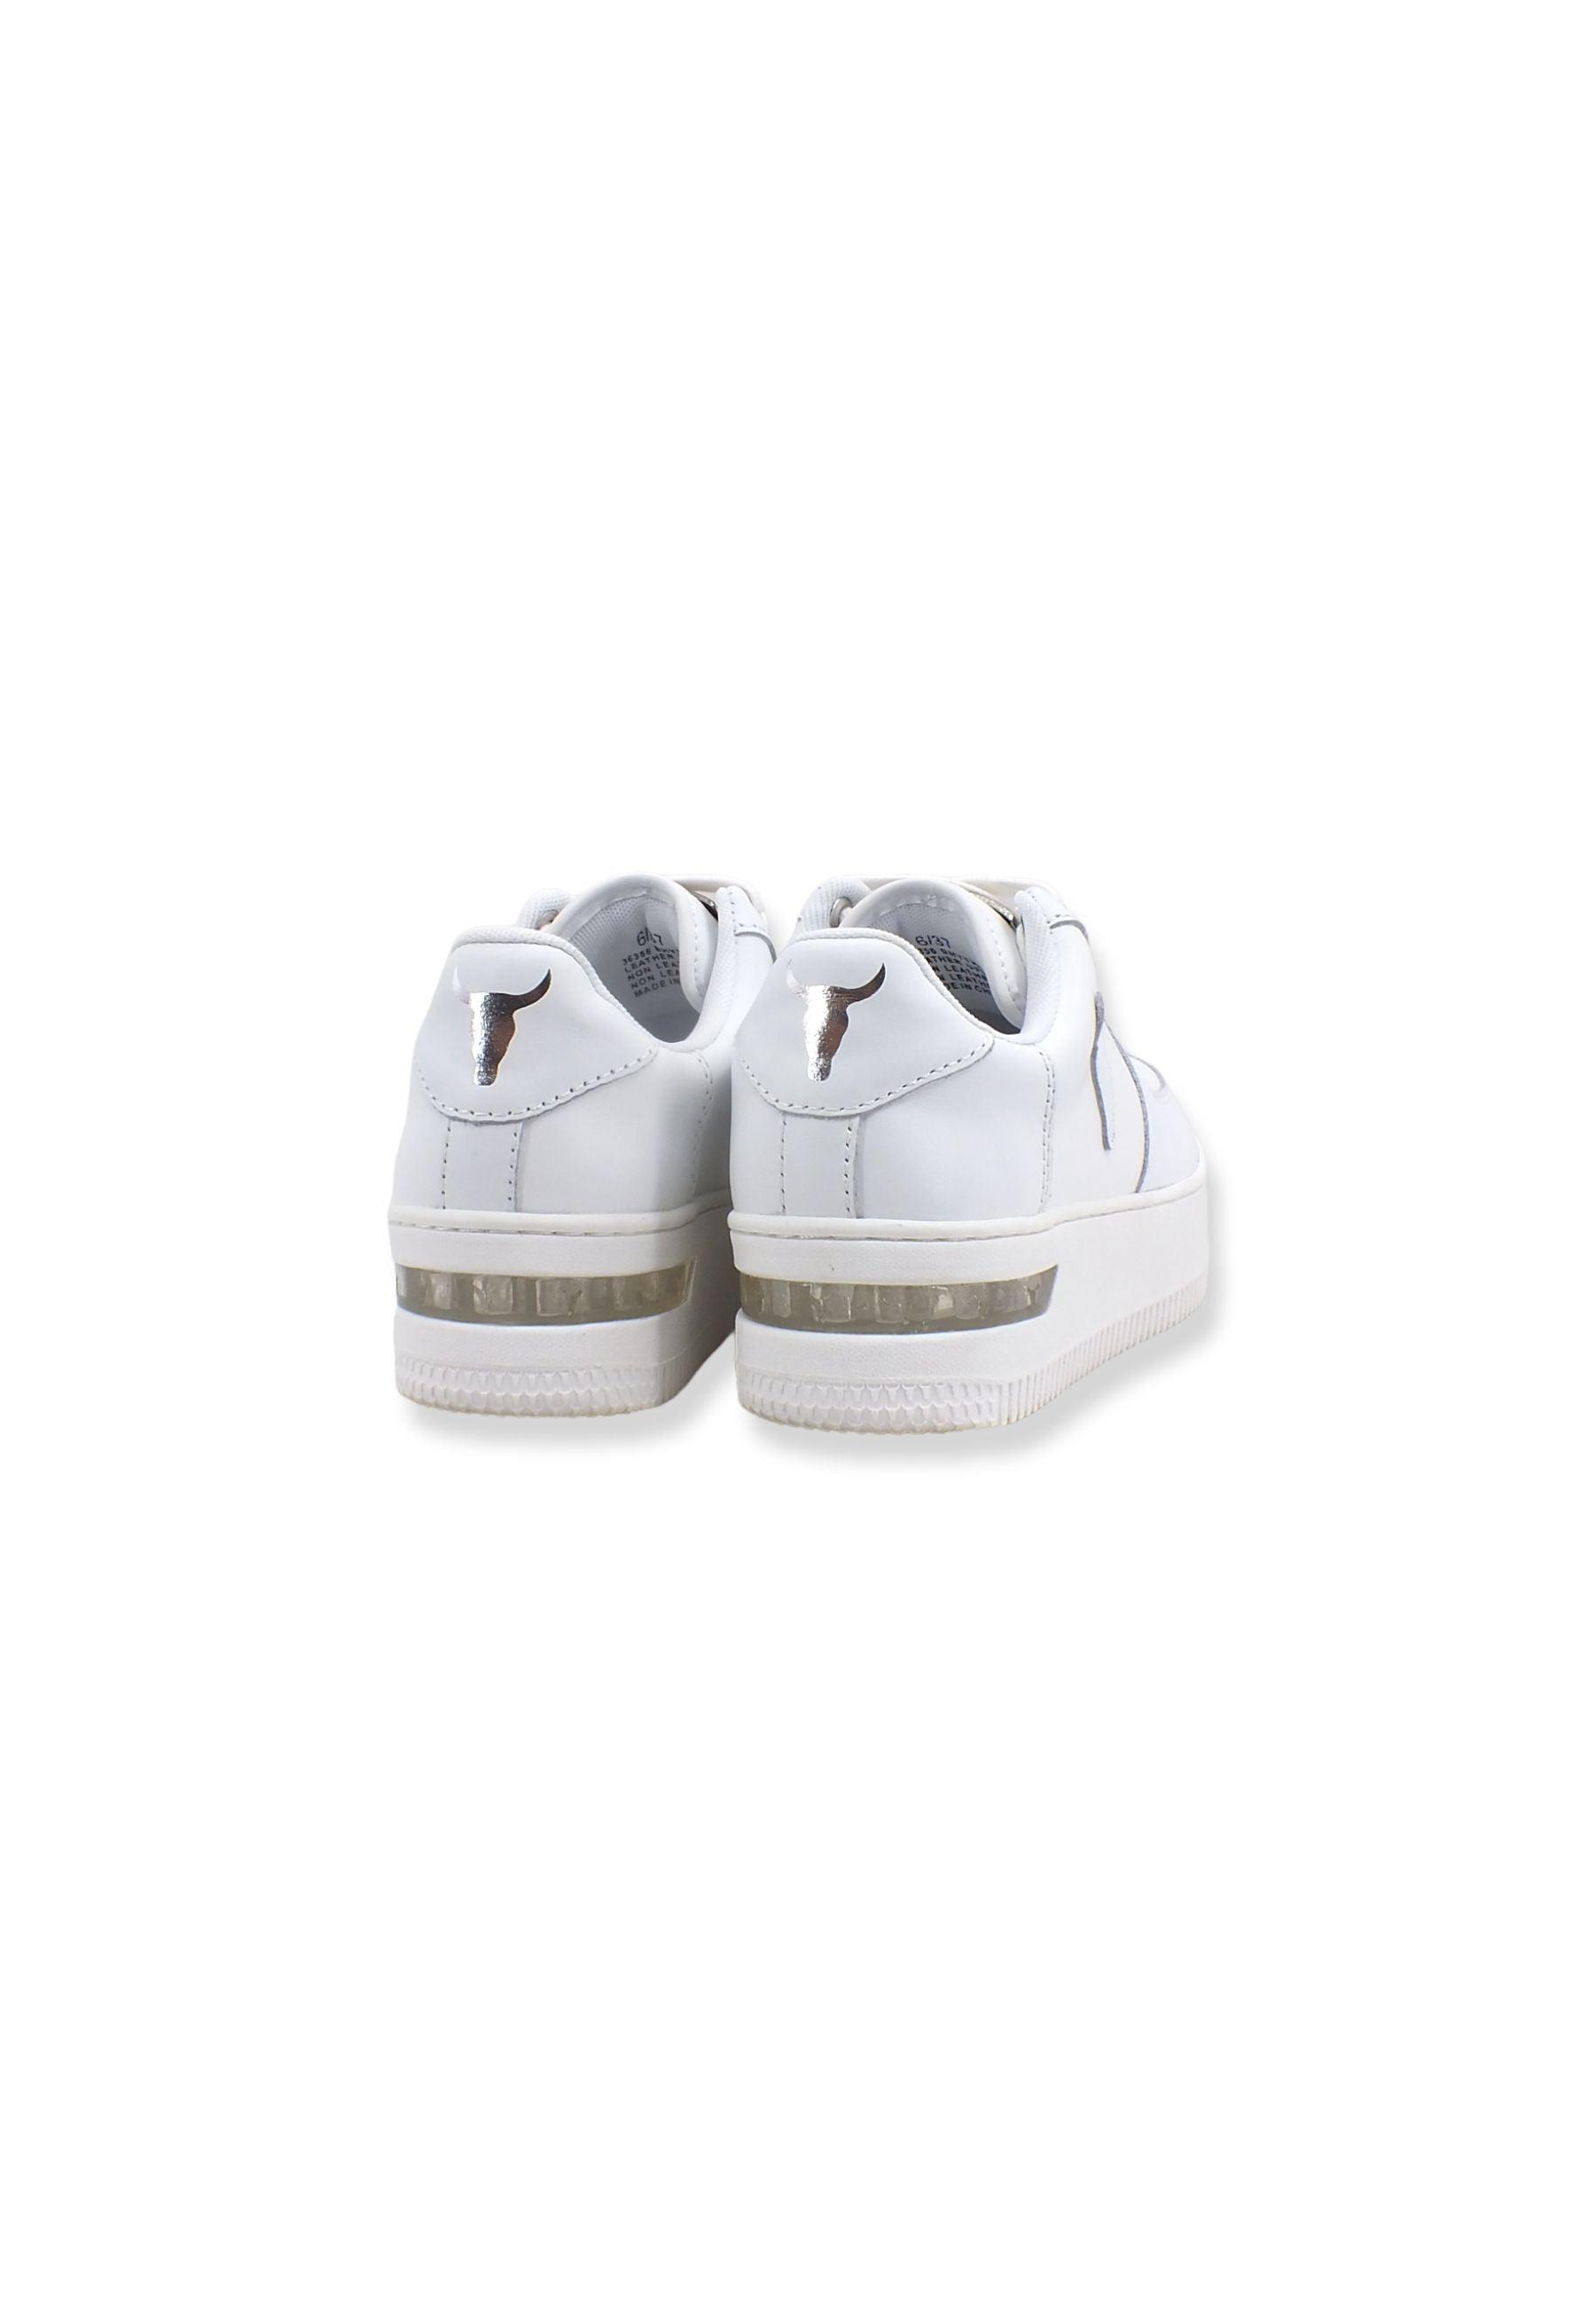 WINDSOR SMITH Sneaker Ox Platform Donna White RHYTHM - Sandrini Calzature e Abbigliamento